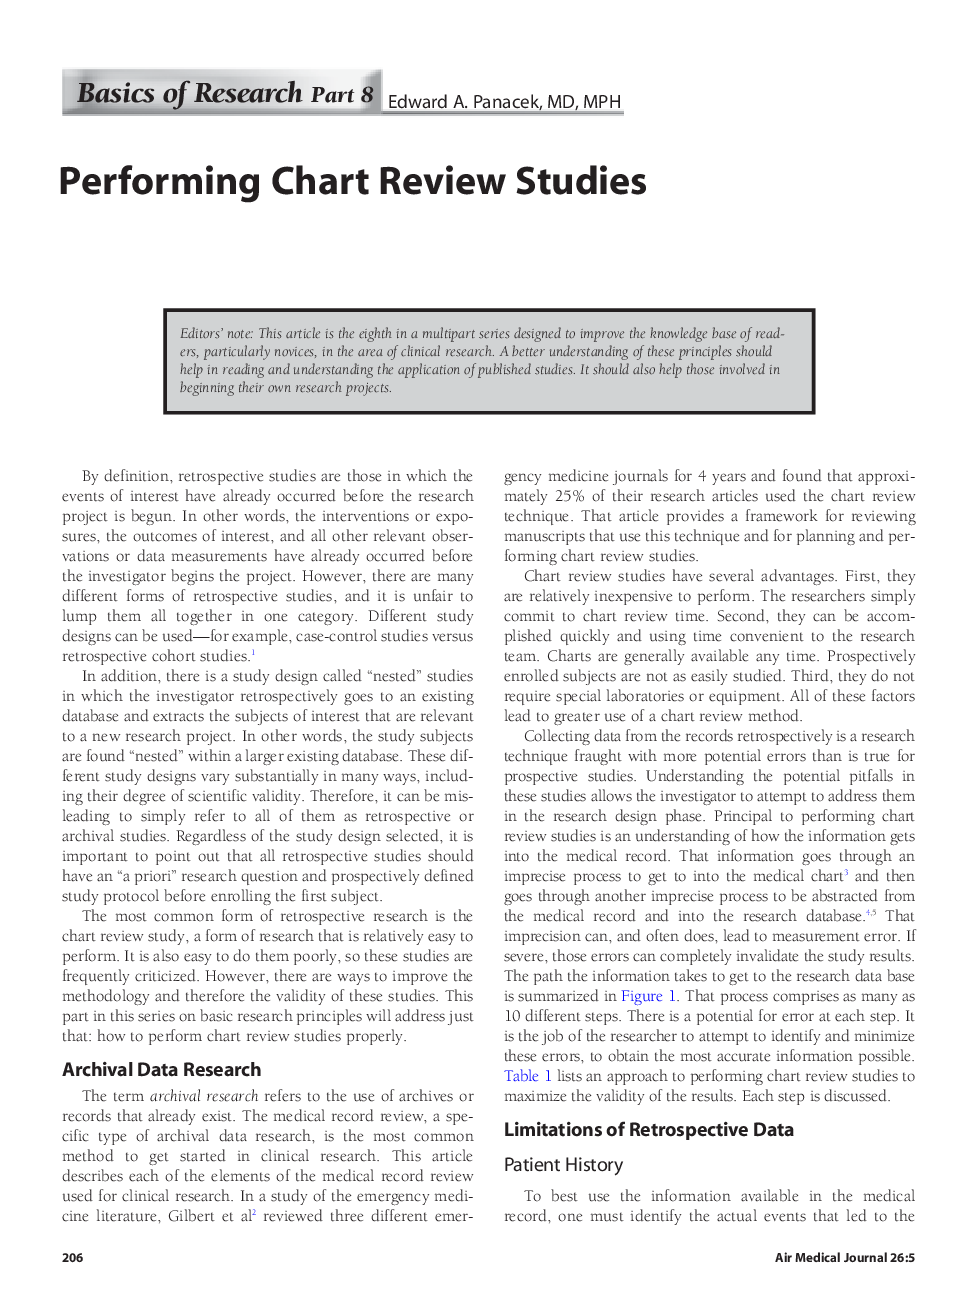 Performing chart review studies